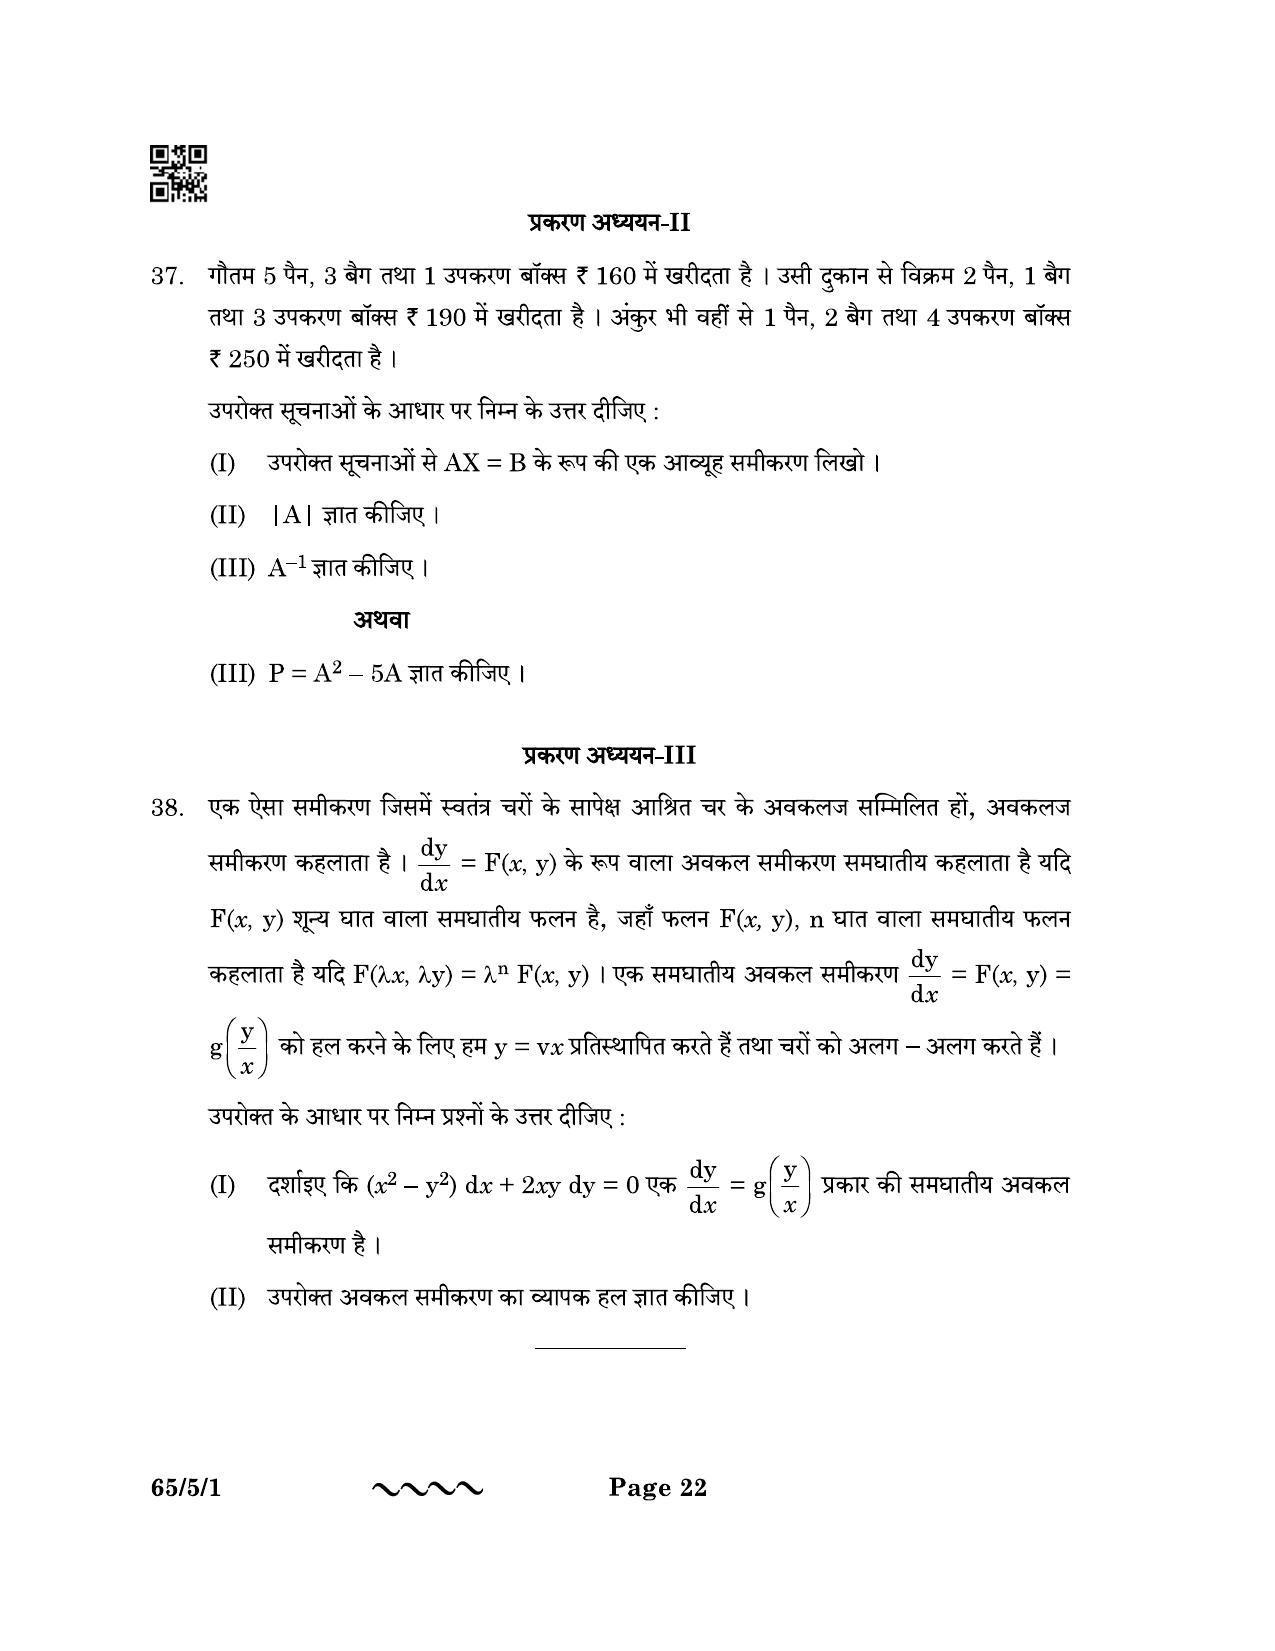 CBSE Class 12 65-5-1 MATHEMATICS 2023 Question Paper - Page 22